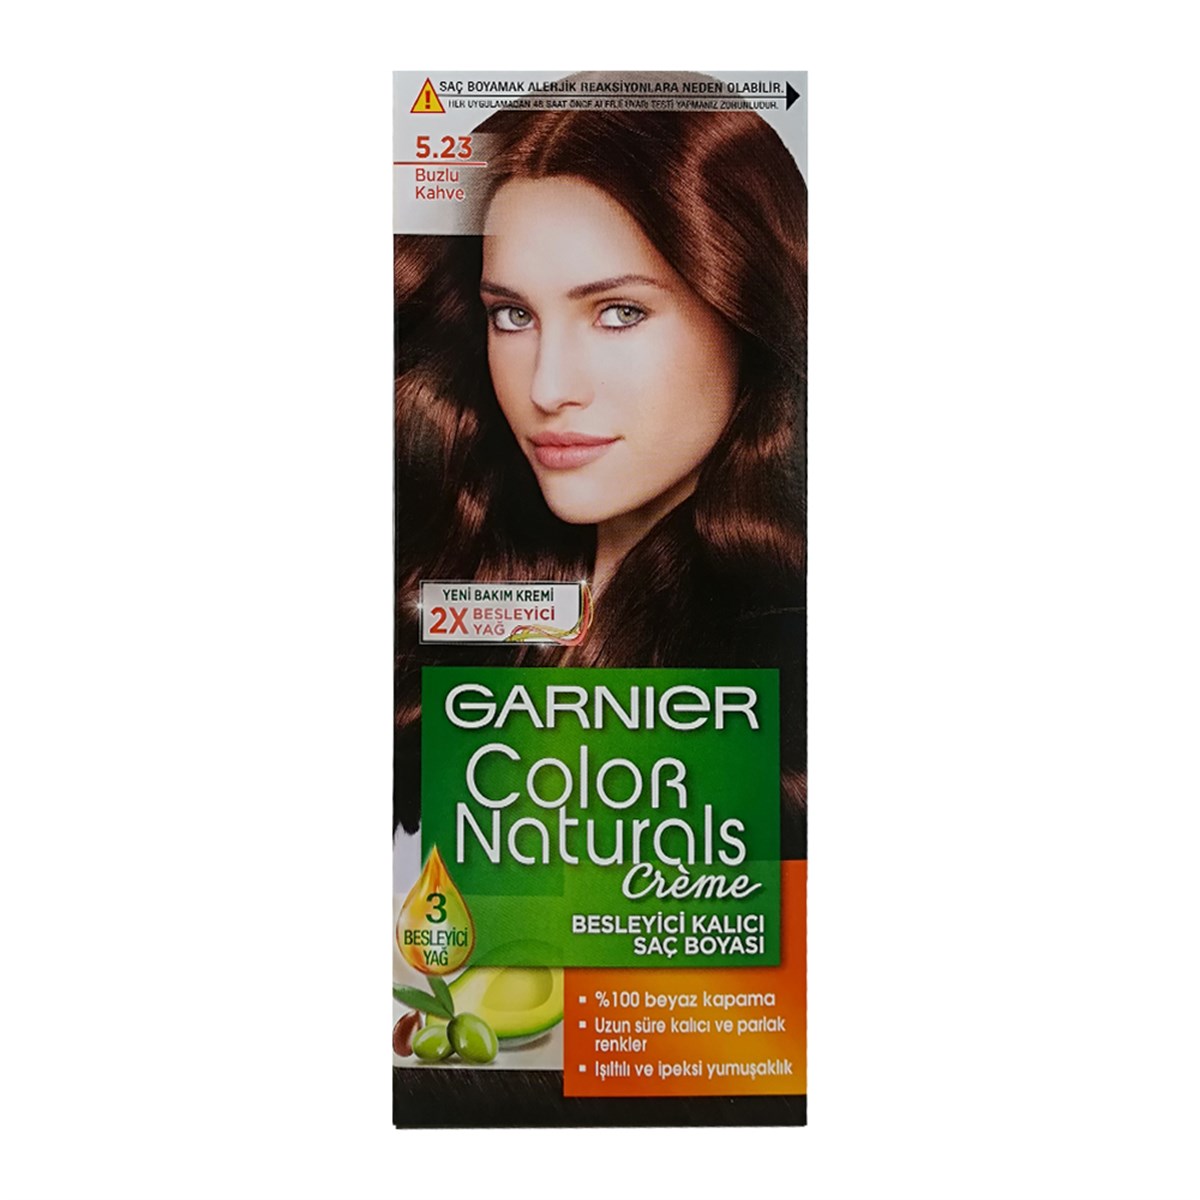 Garnier Color Naturals Creme Saç Boyası Buzlu Kahve 5/23 - Platin